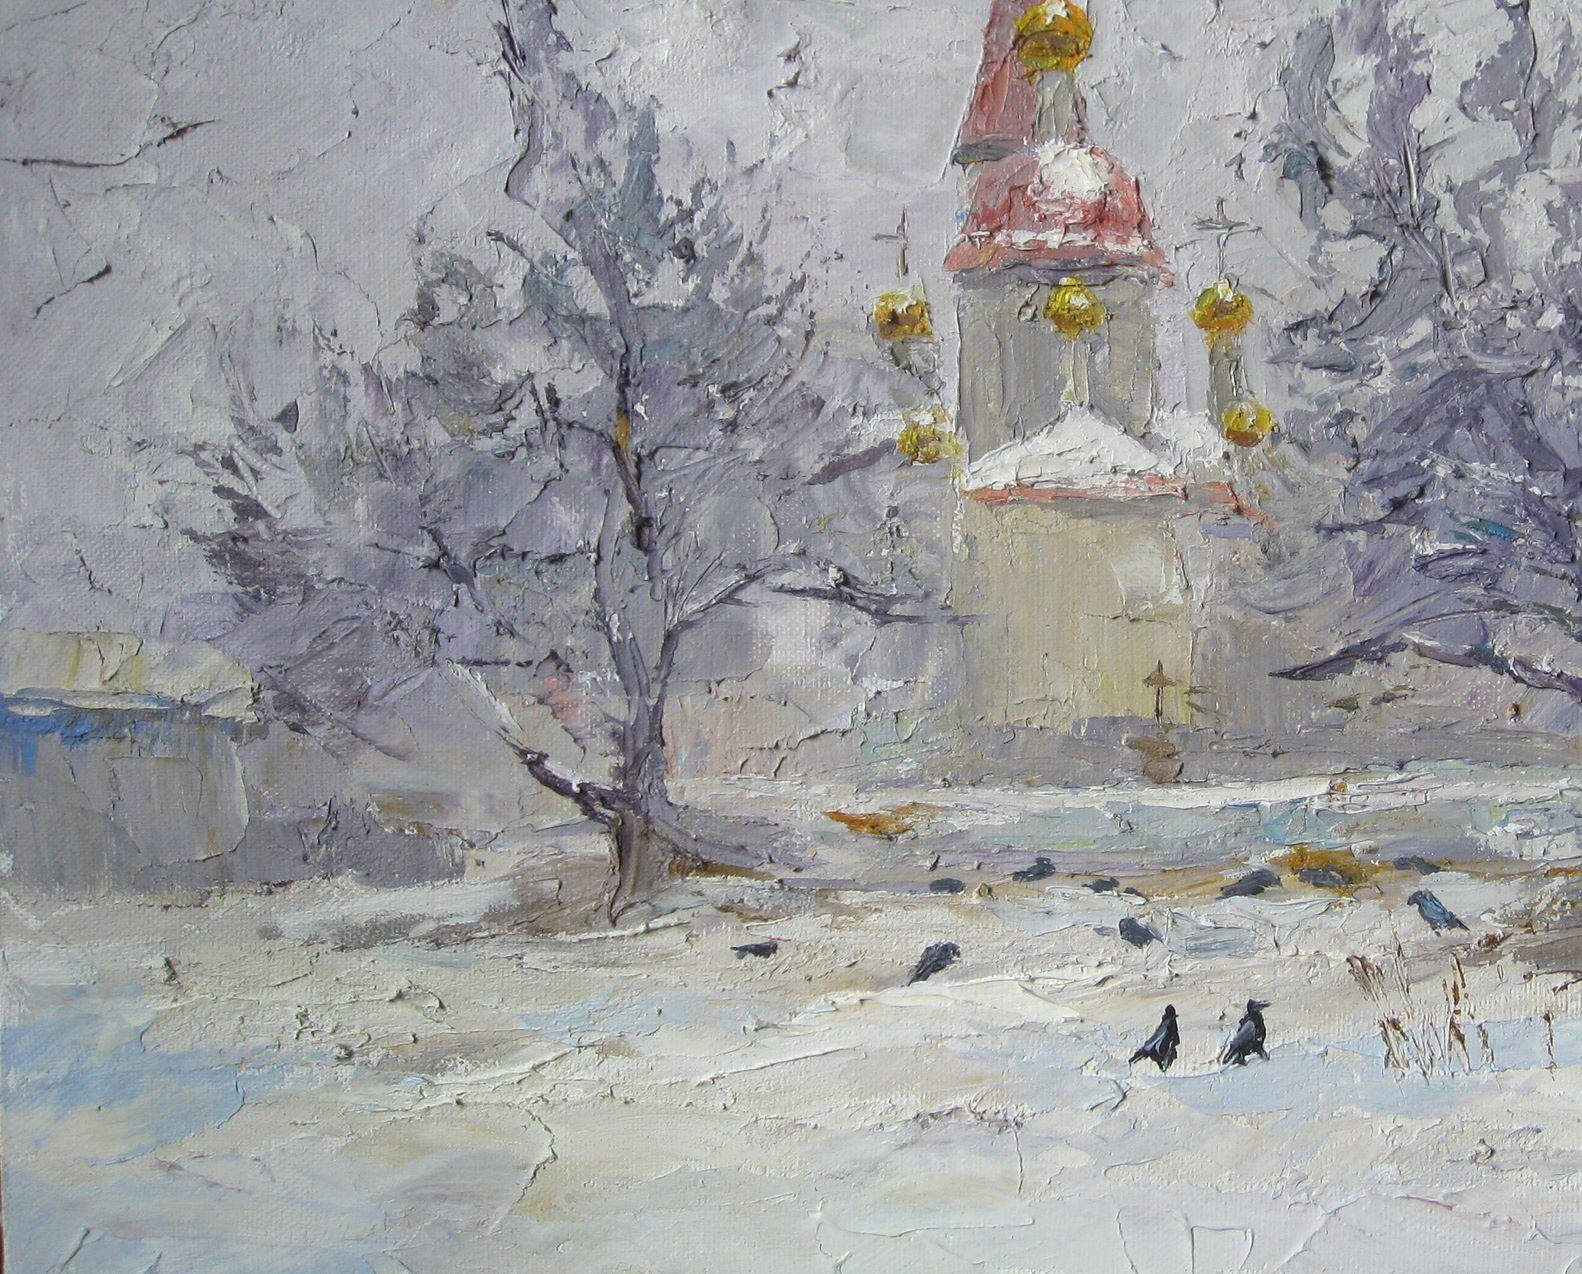 Artist: Boris Serdyuk 
Work: Original oil painting, handmade artwork, one of a kind 
Medium: Oil on Canvas
Style: Impressionism
Year: 2020
Title: Breathed cold
Size: 16.5